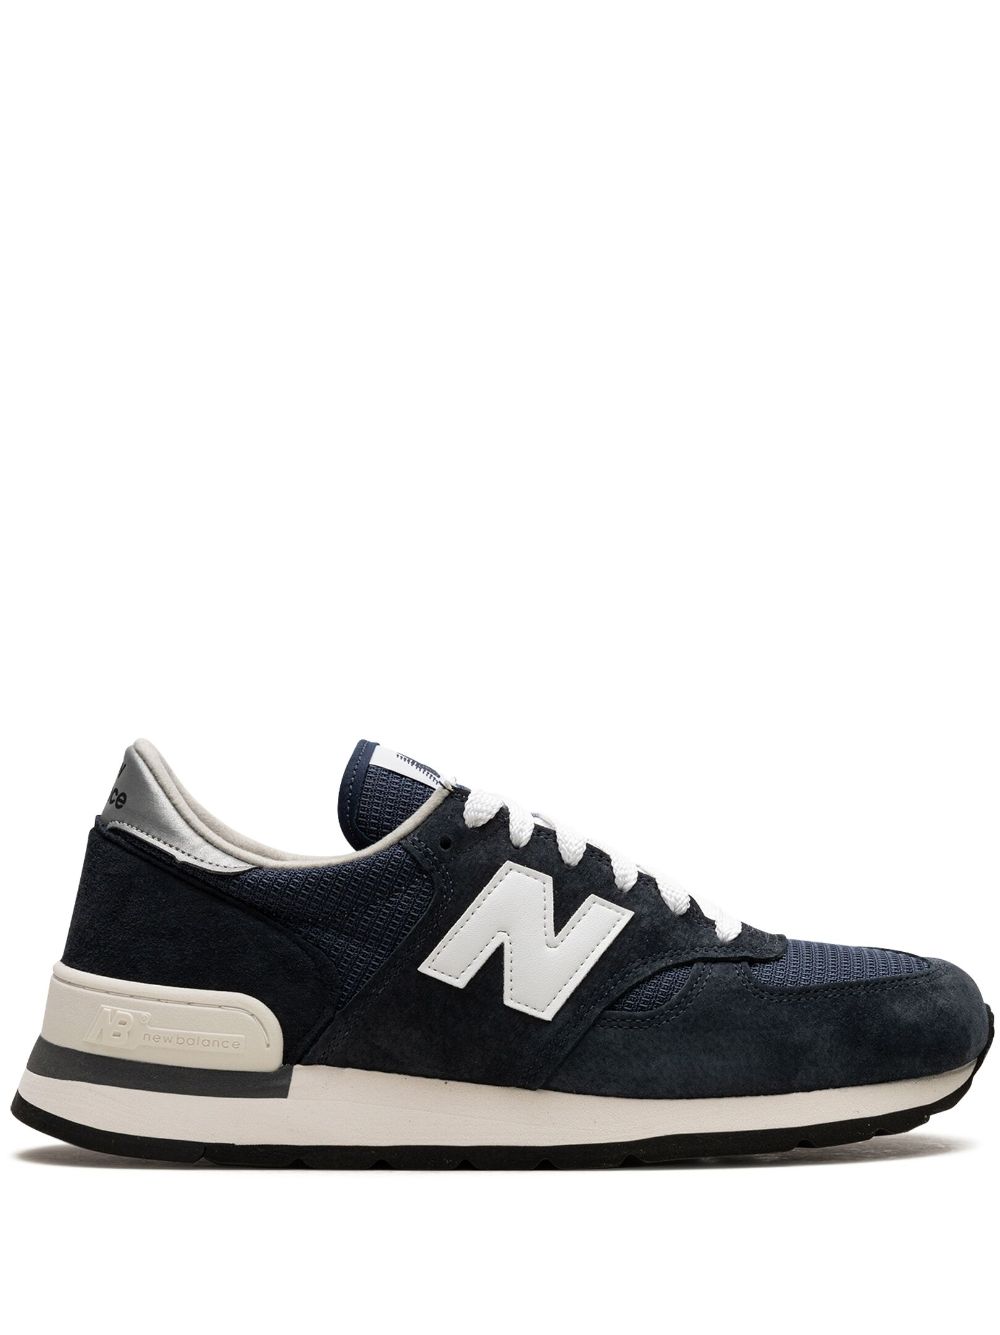 New Balance 990 v1 "Navy/White" sneakers - Blue von New Balance